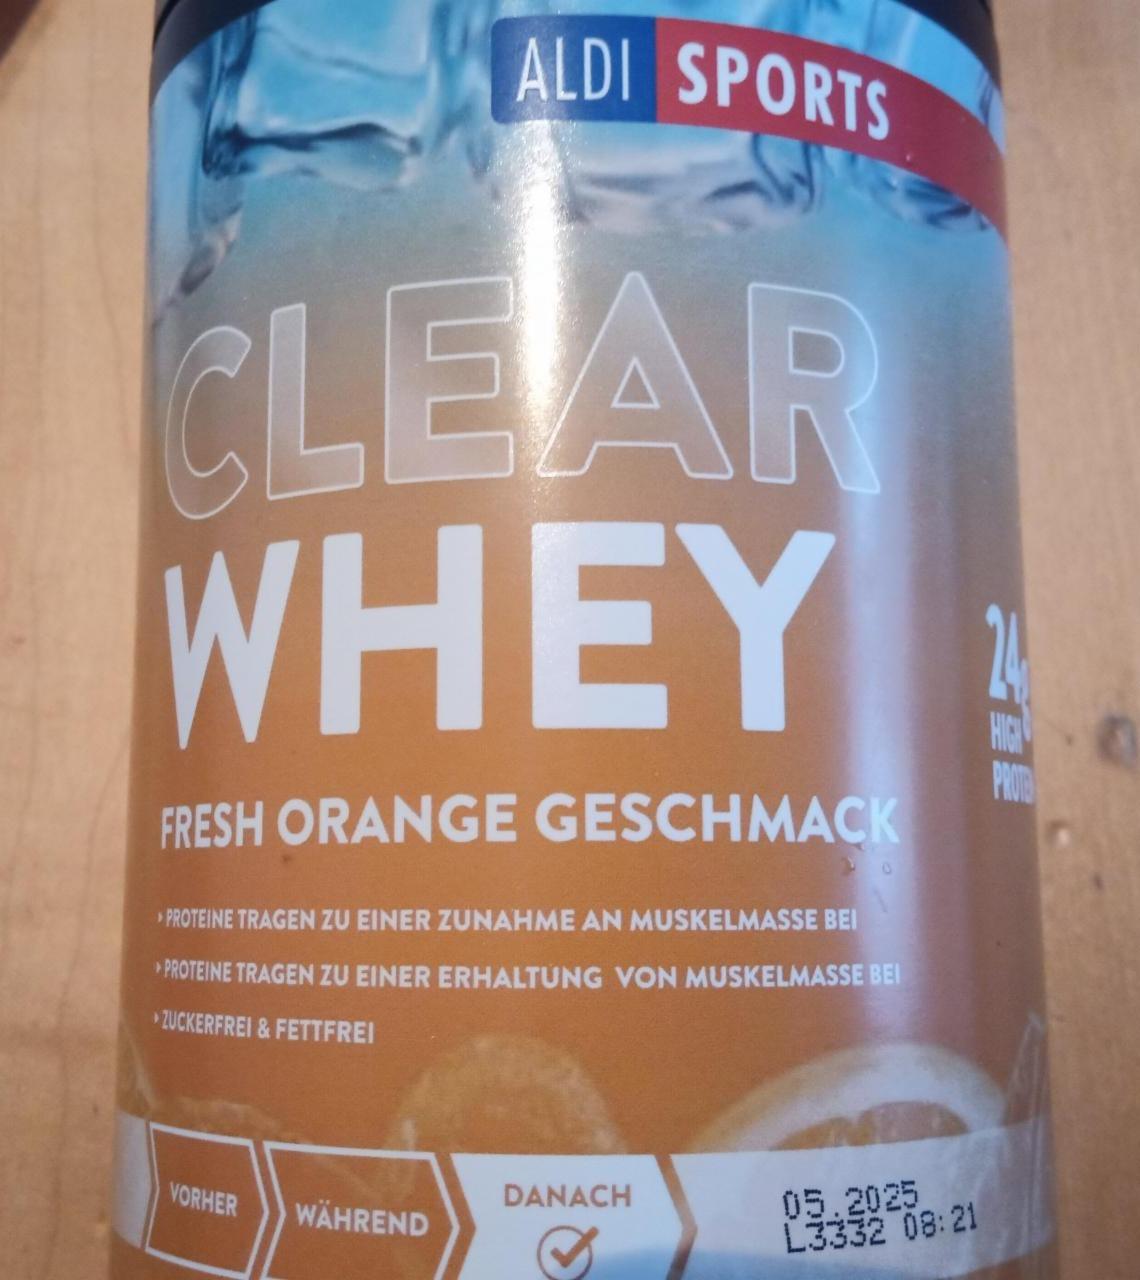 Fotografie - Clear Whey Fresh Orange Geschmack Aldi Sports